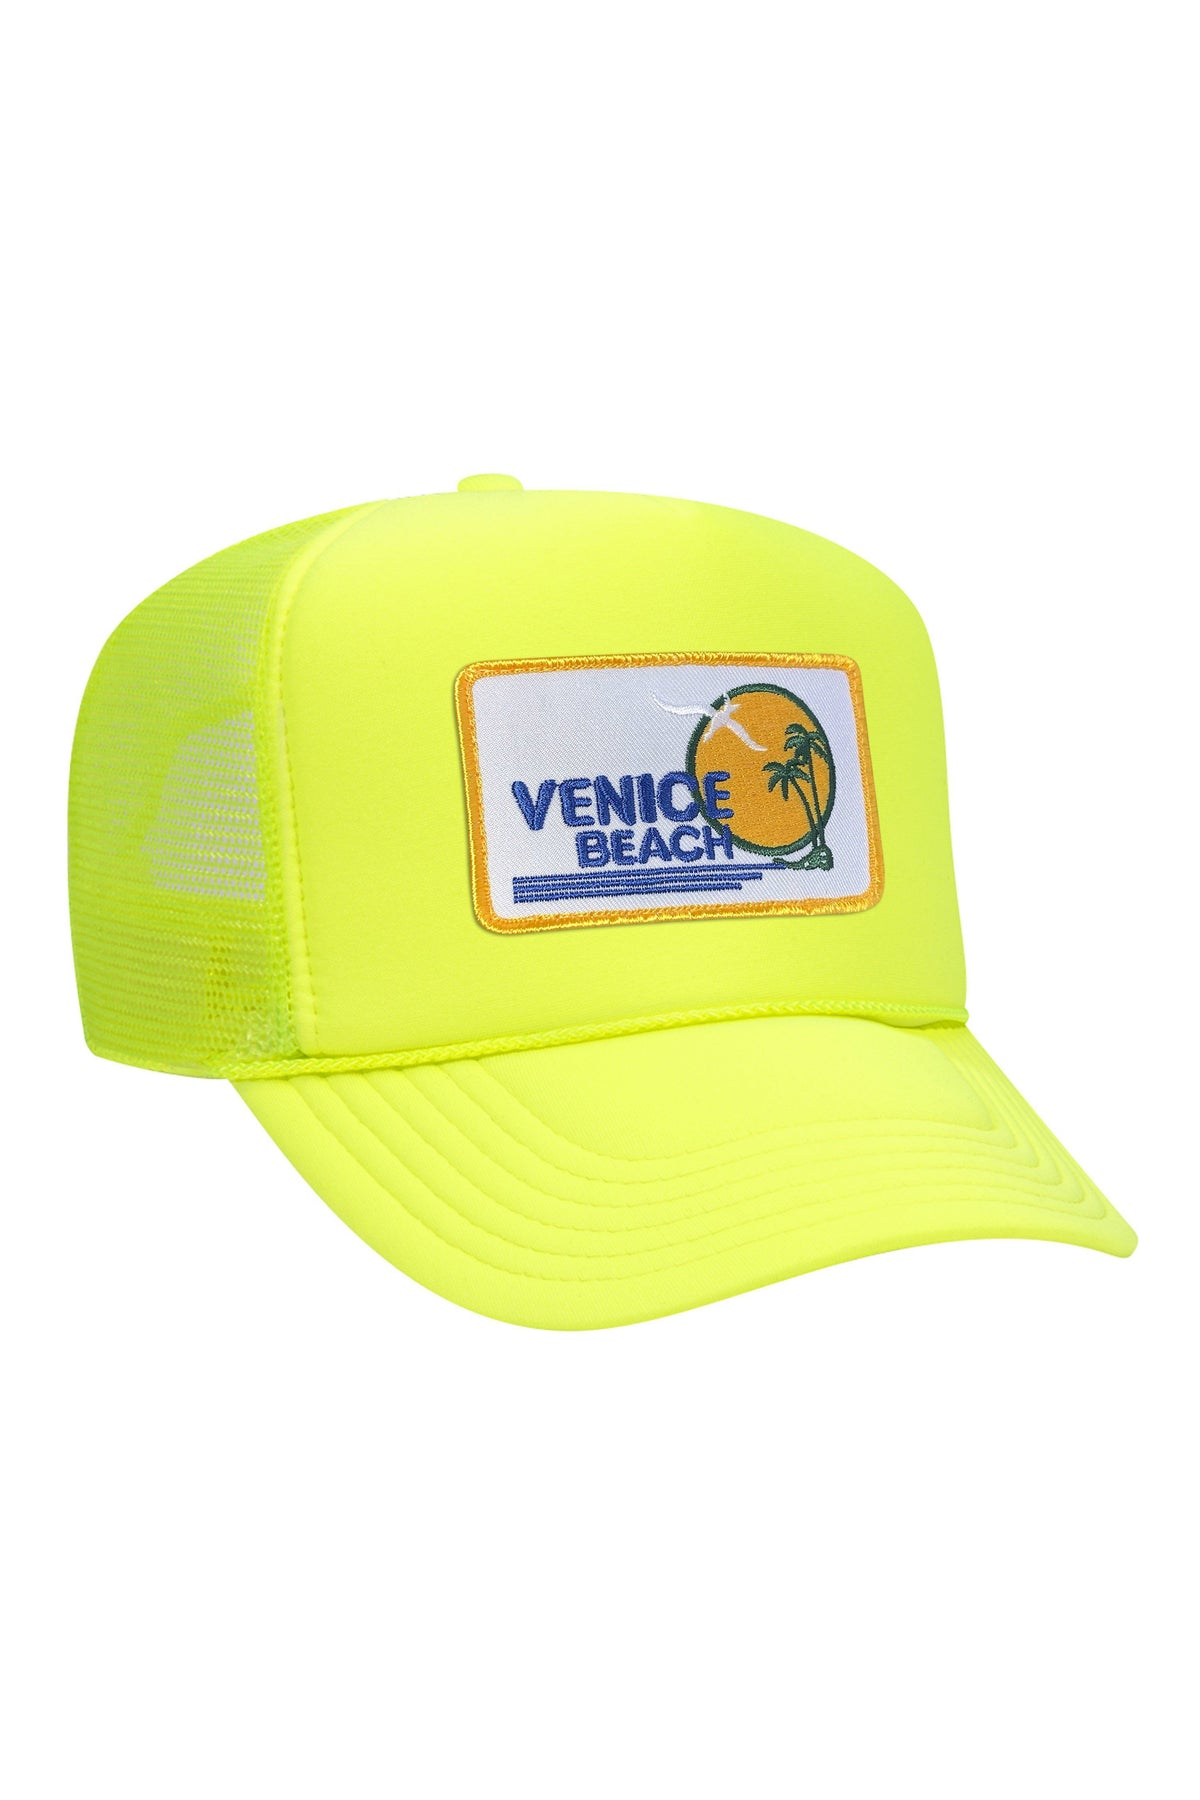 VENICE BEACH VINTAGE TRUCKER HAT HATS Aviator Nation OS NEON YELLOW 